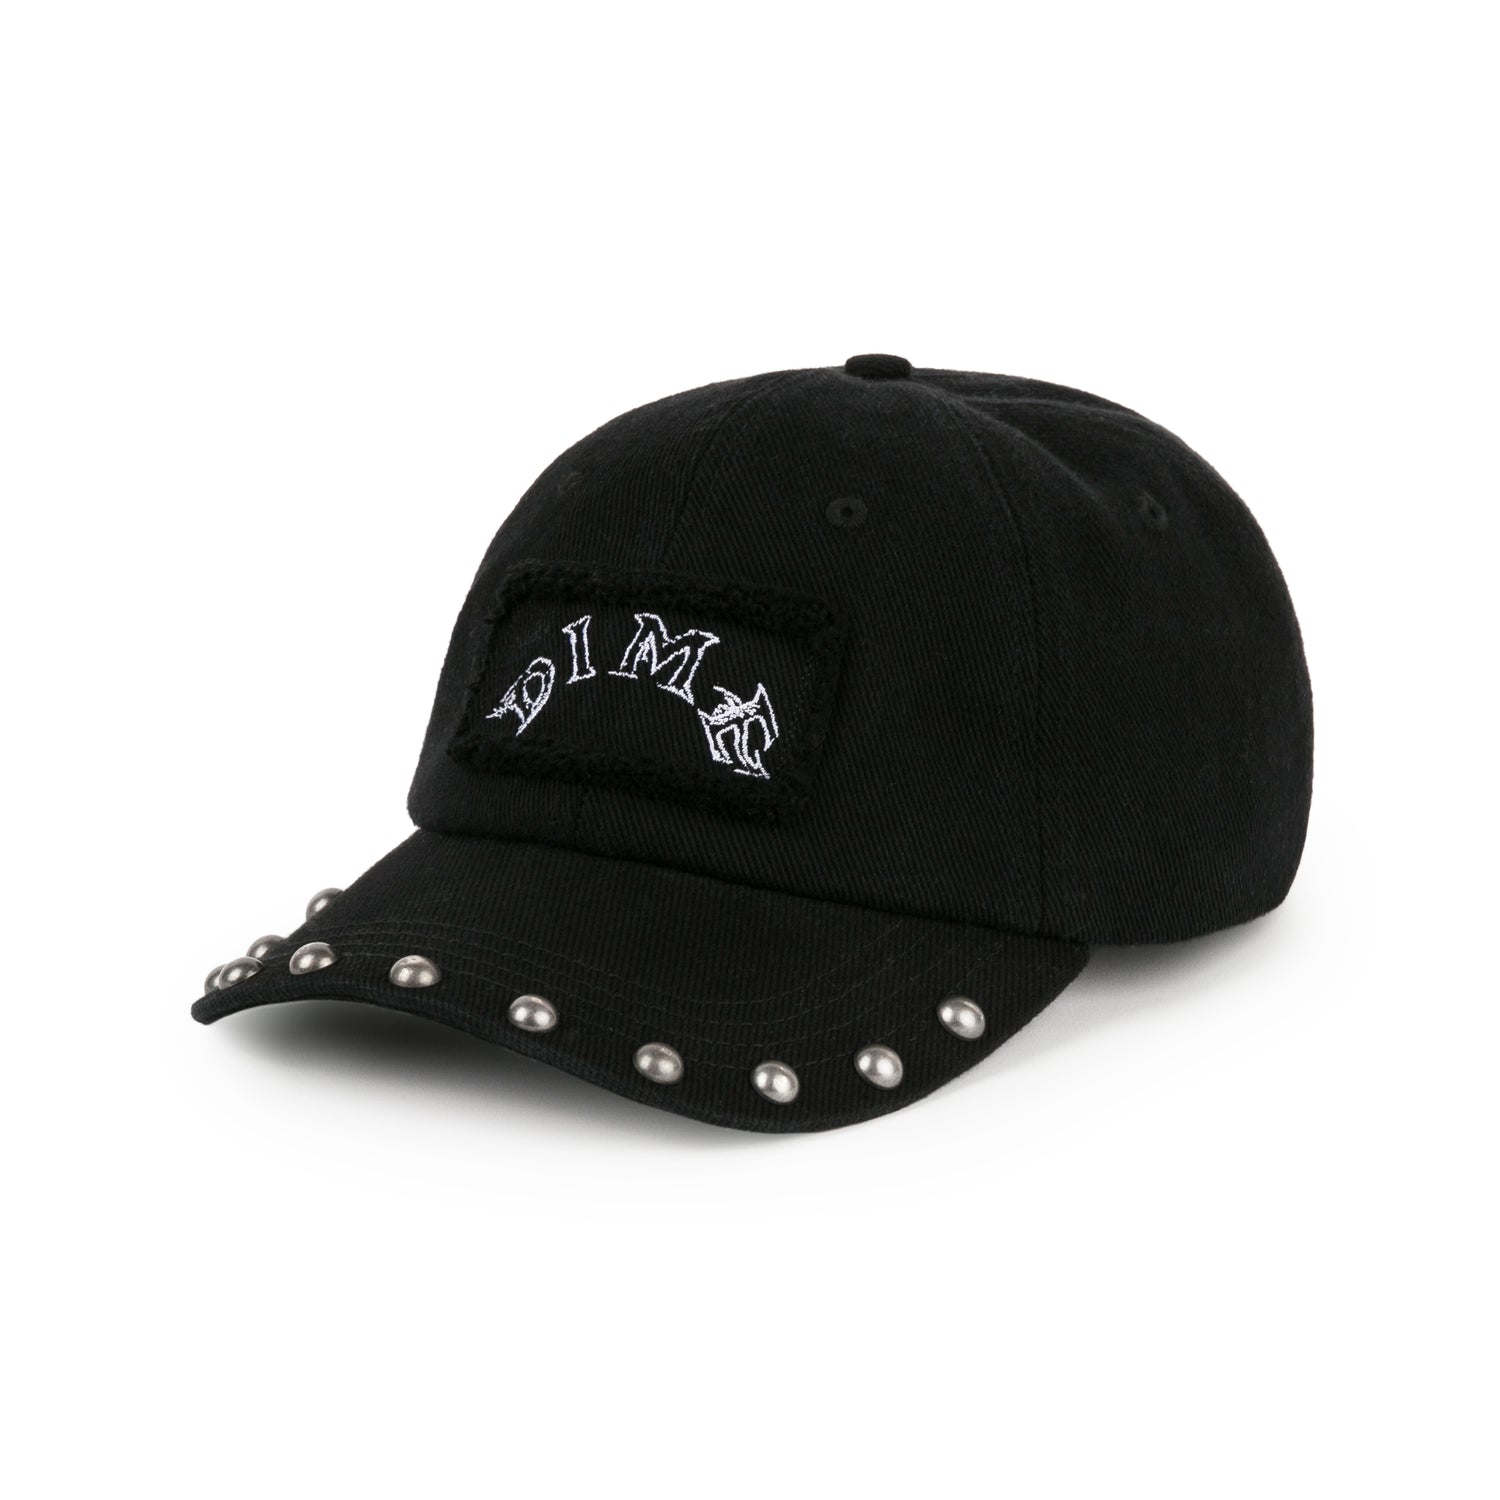 Studded Low Pro Hat, Black